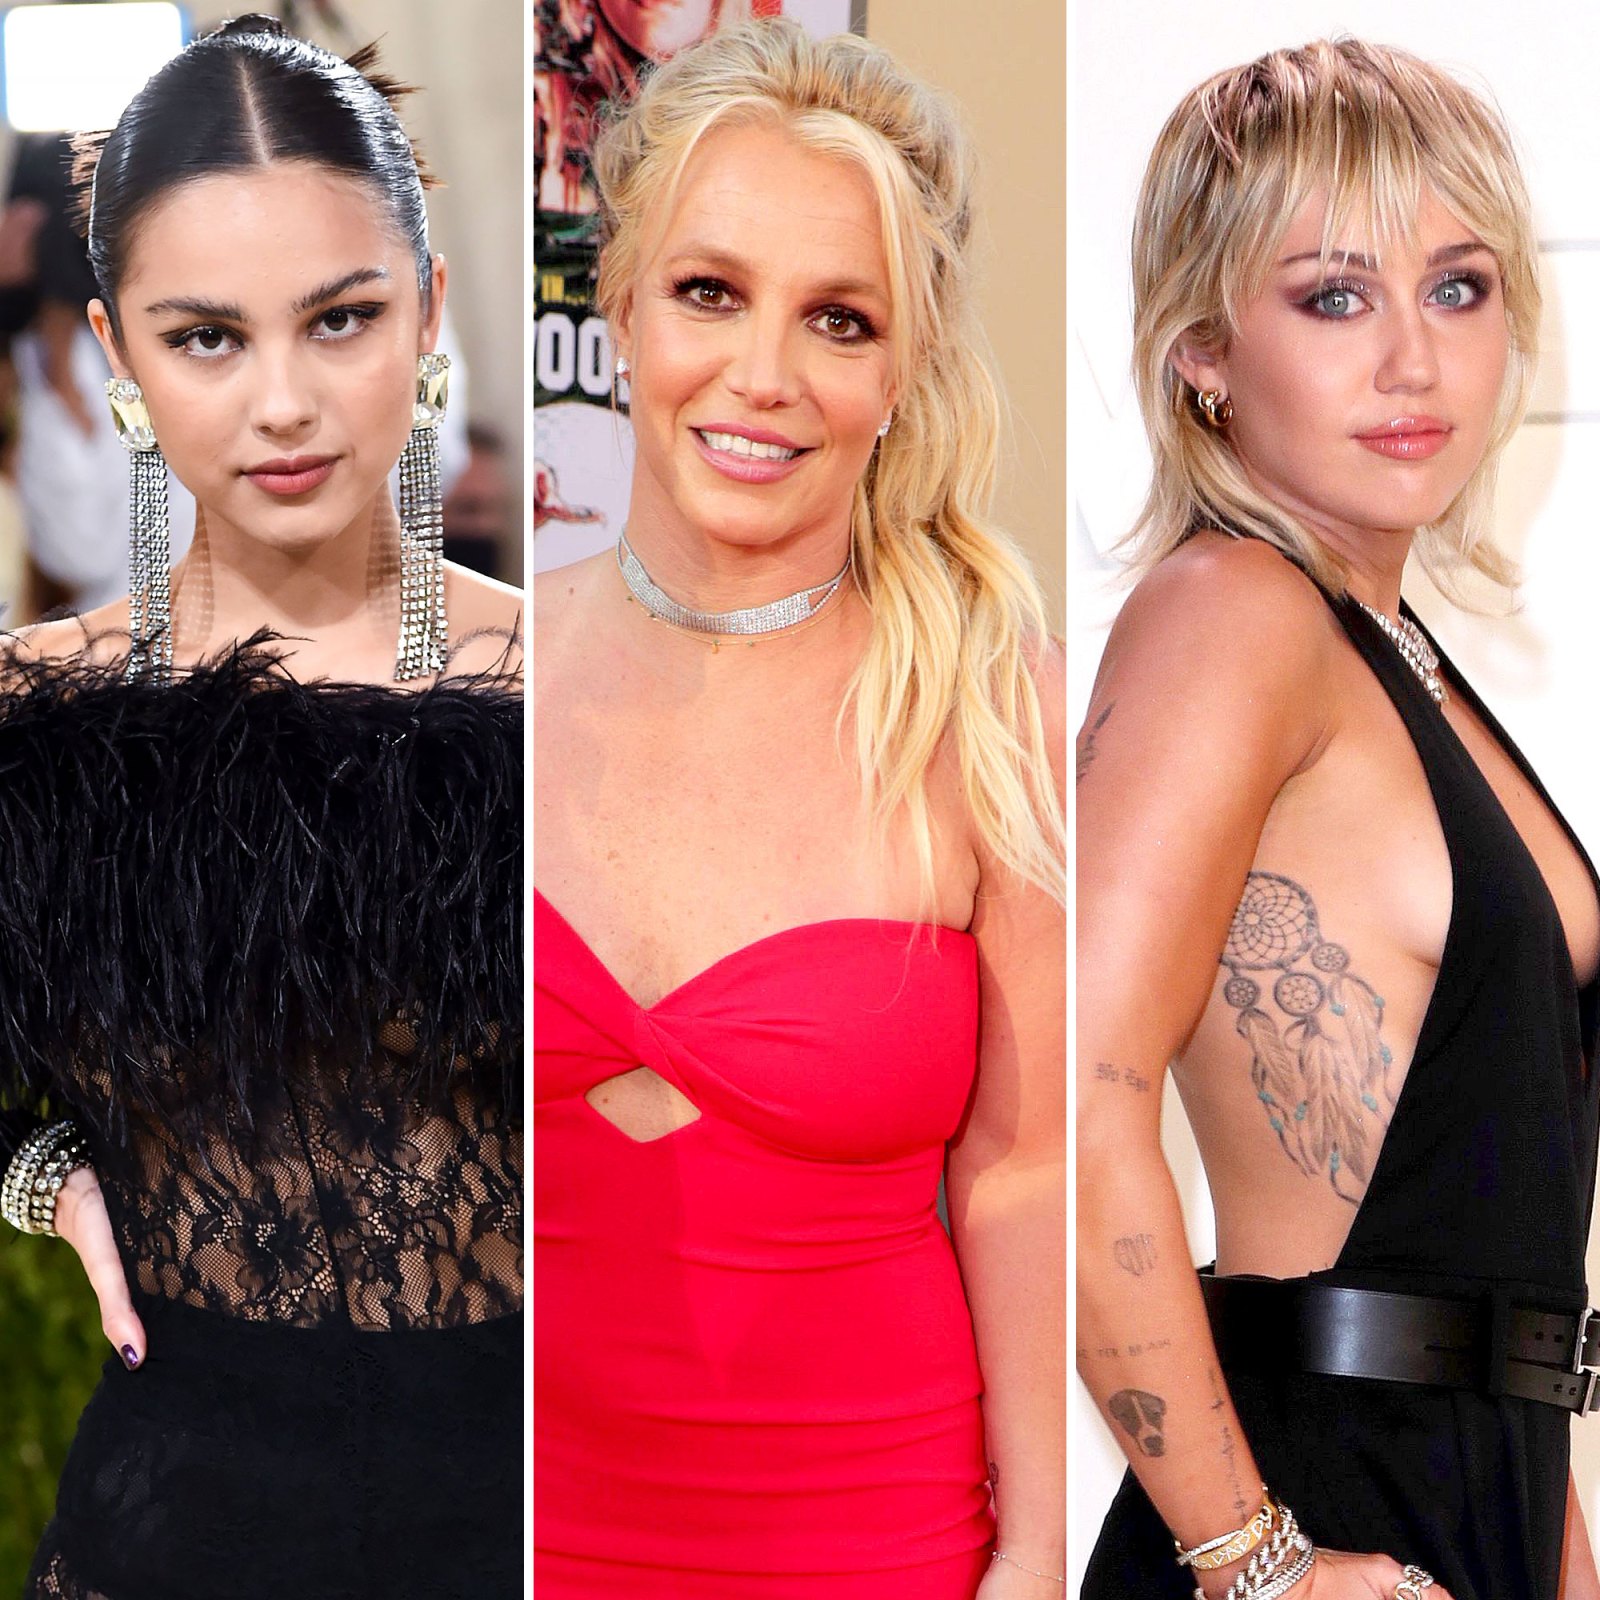 Chloe Moretz Facial Porn - Paris Hilton, Miley Cyrus, More Celebs Support #FreeBritney Movement